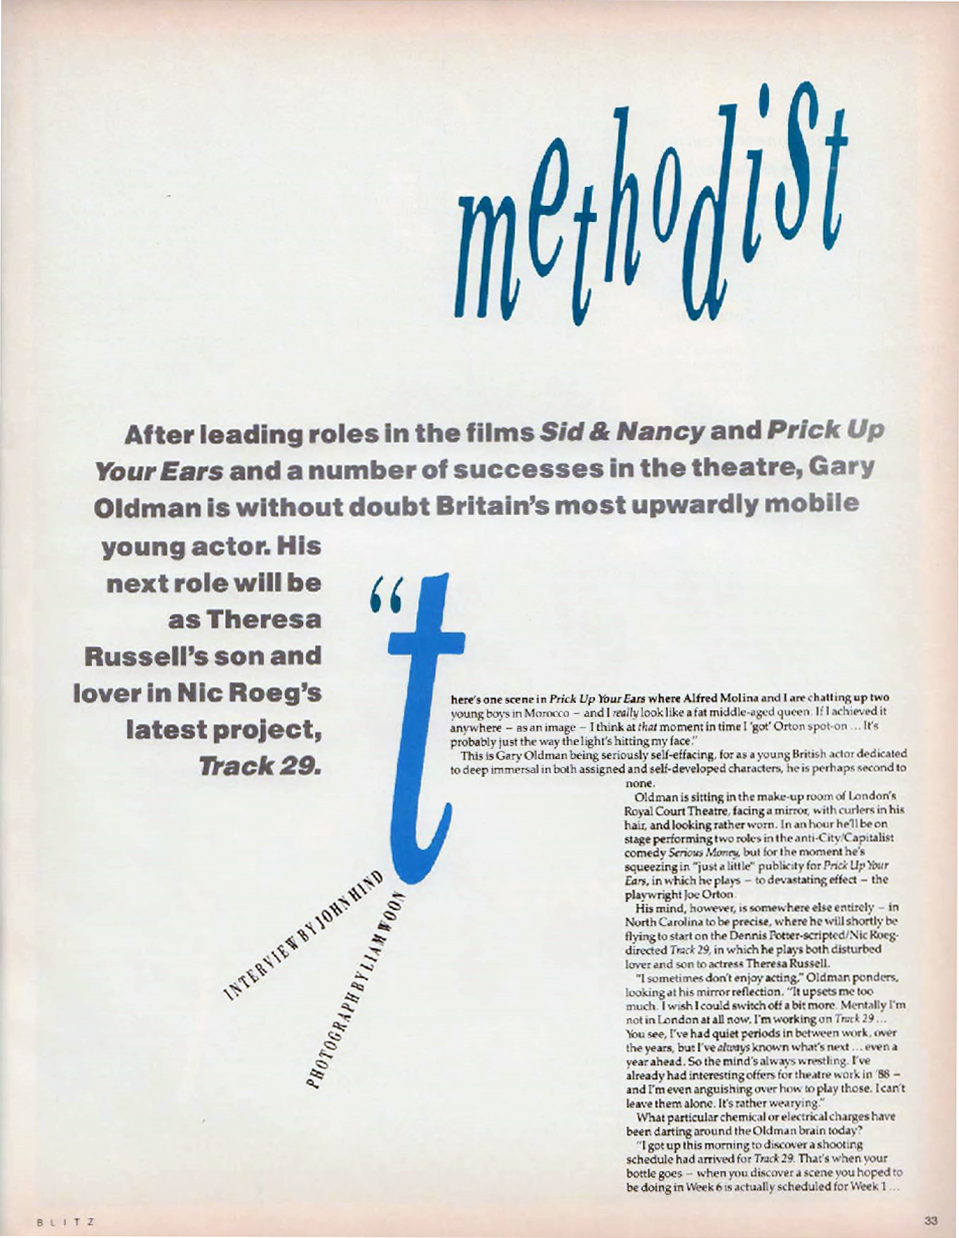 BLITZ 54 Jun 1987 Gary Oldman interview by John Hind